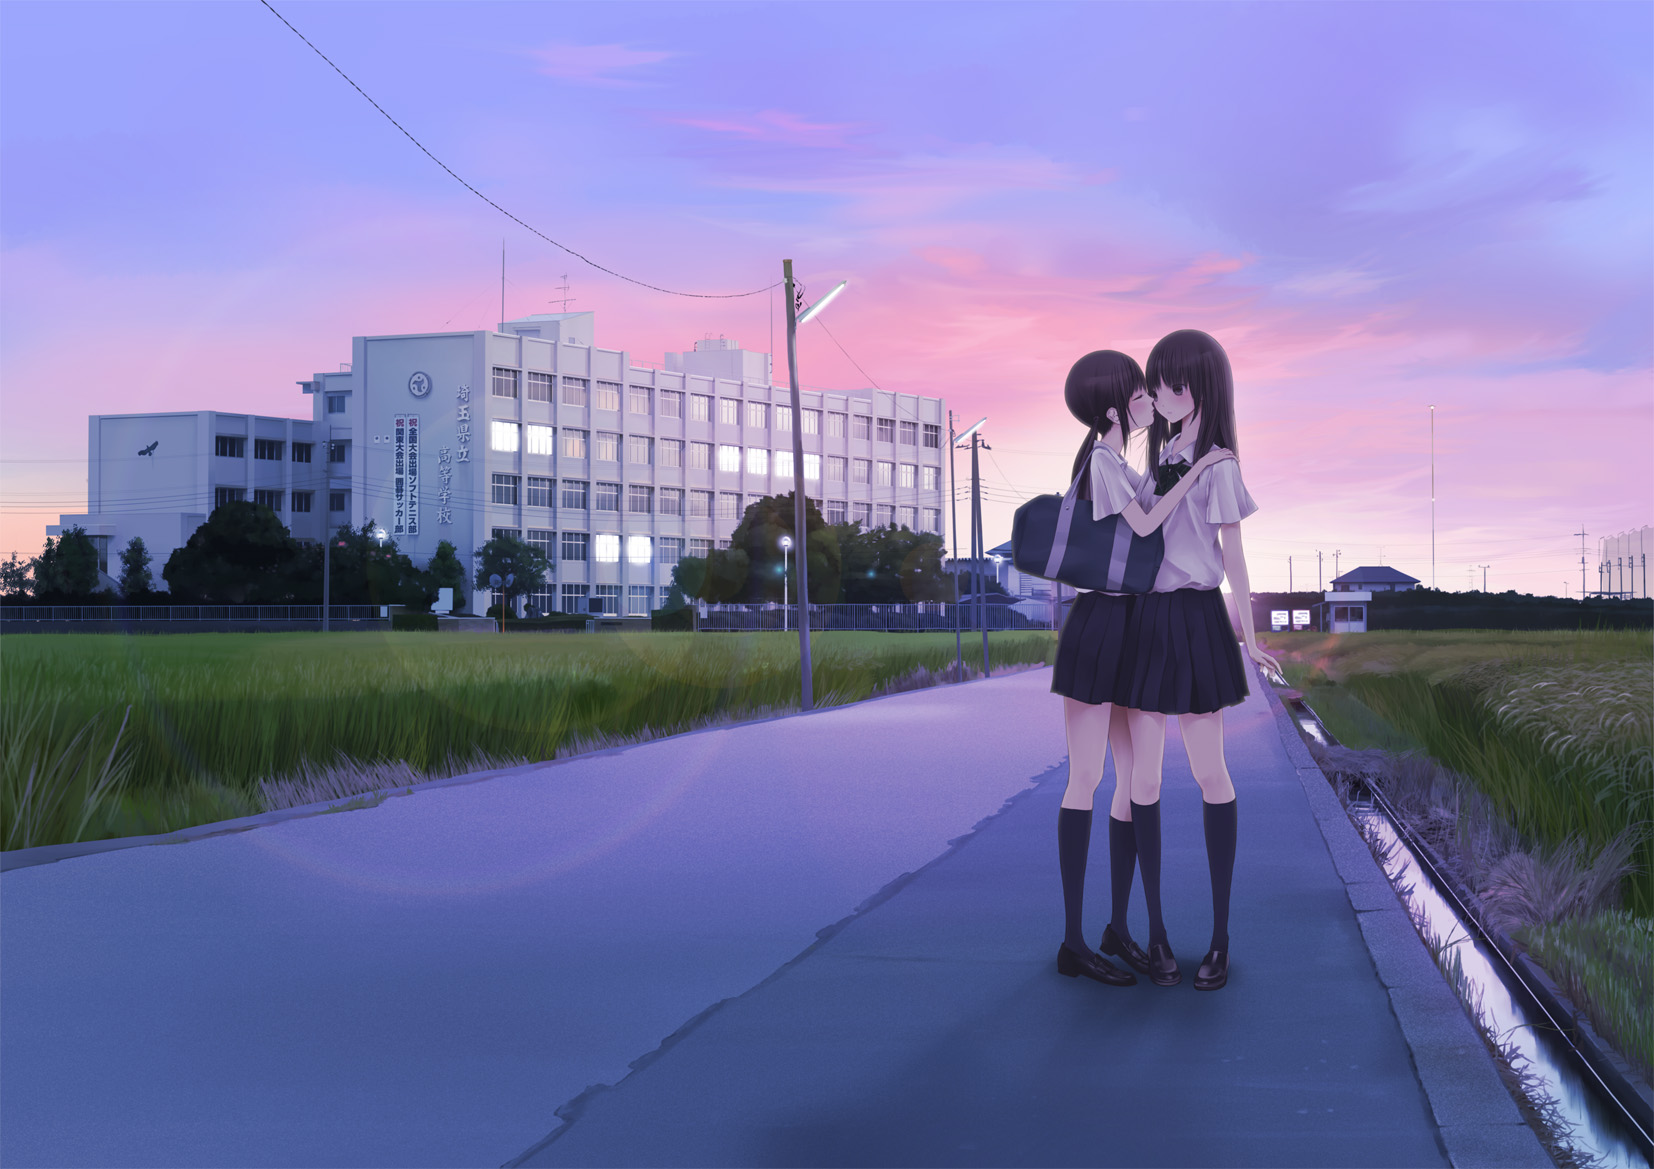 18+] Anime School Building Wallpapers - WallpaperSafari